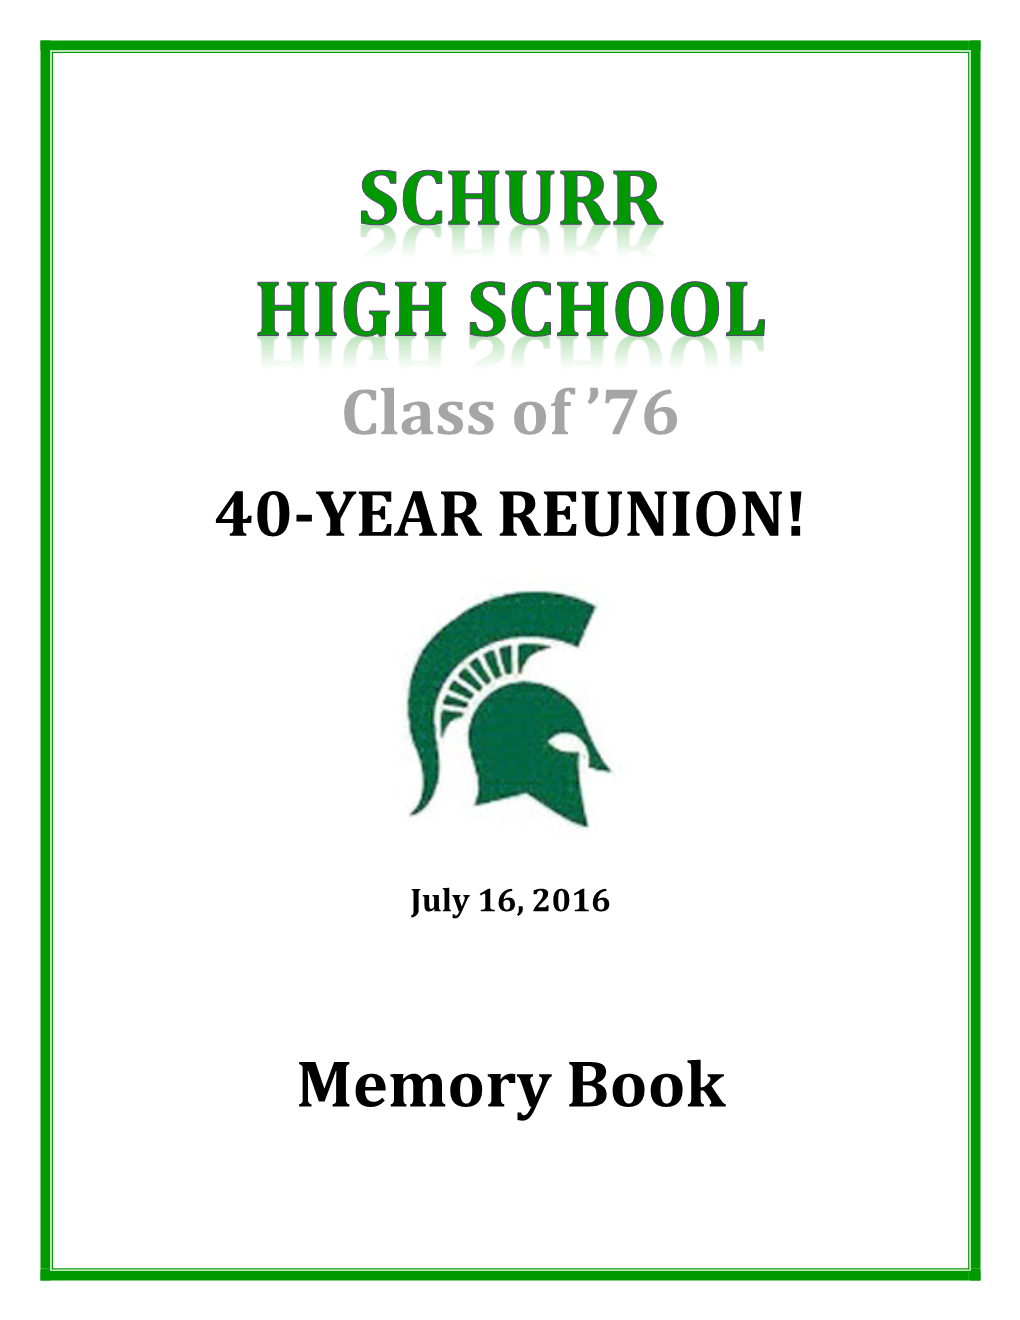 Class of '76 40-YEAR REUNION! Memory Book